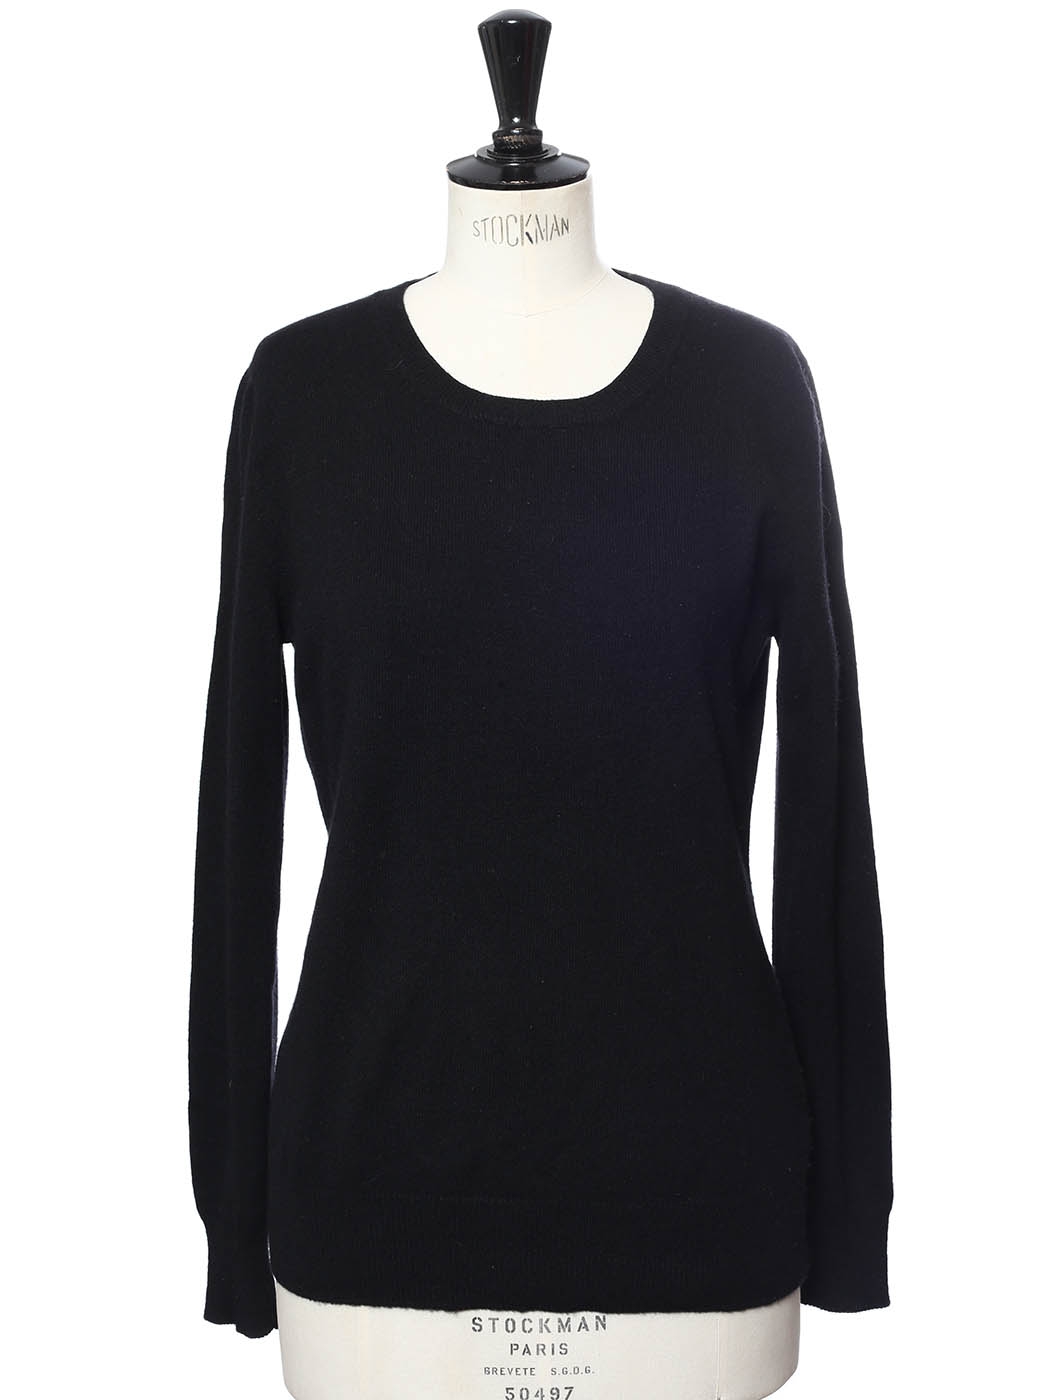 Louise Paris - THE MERCER NY Black cashmere round neckline sweater ...